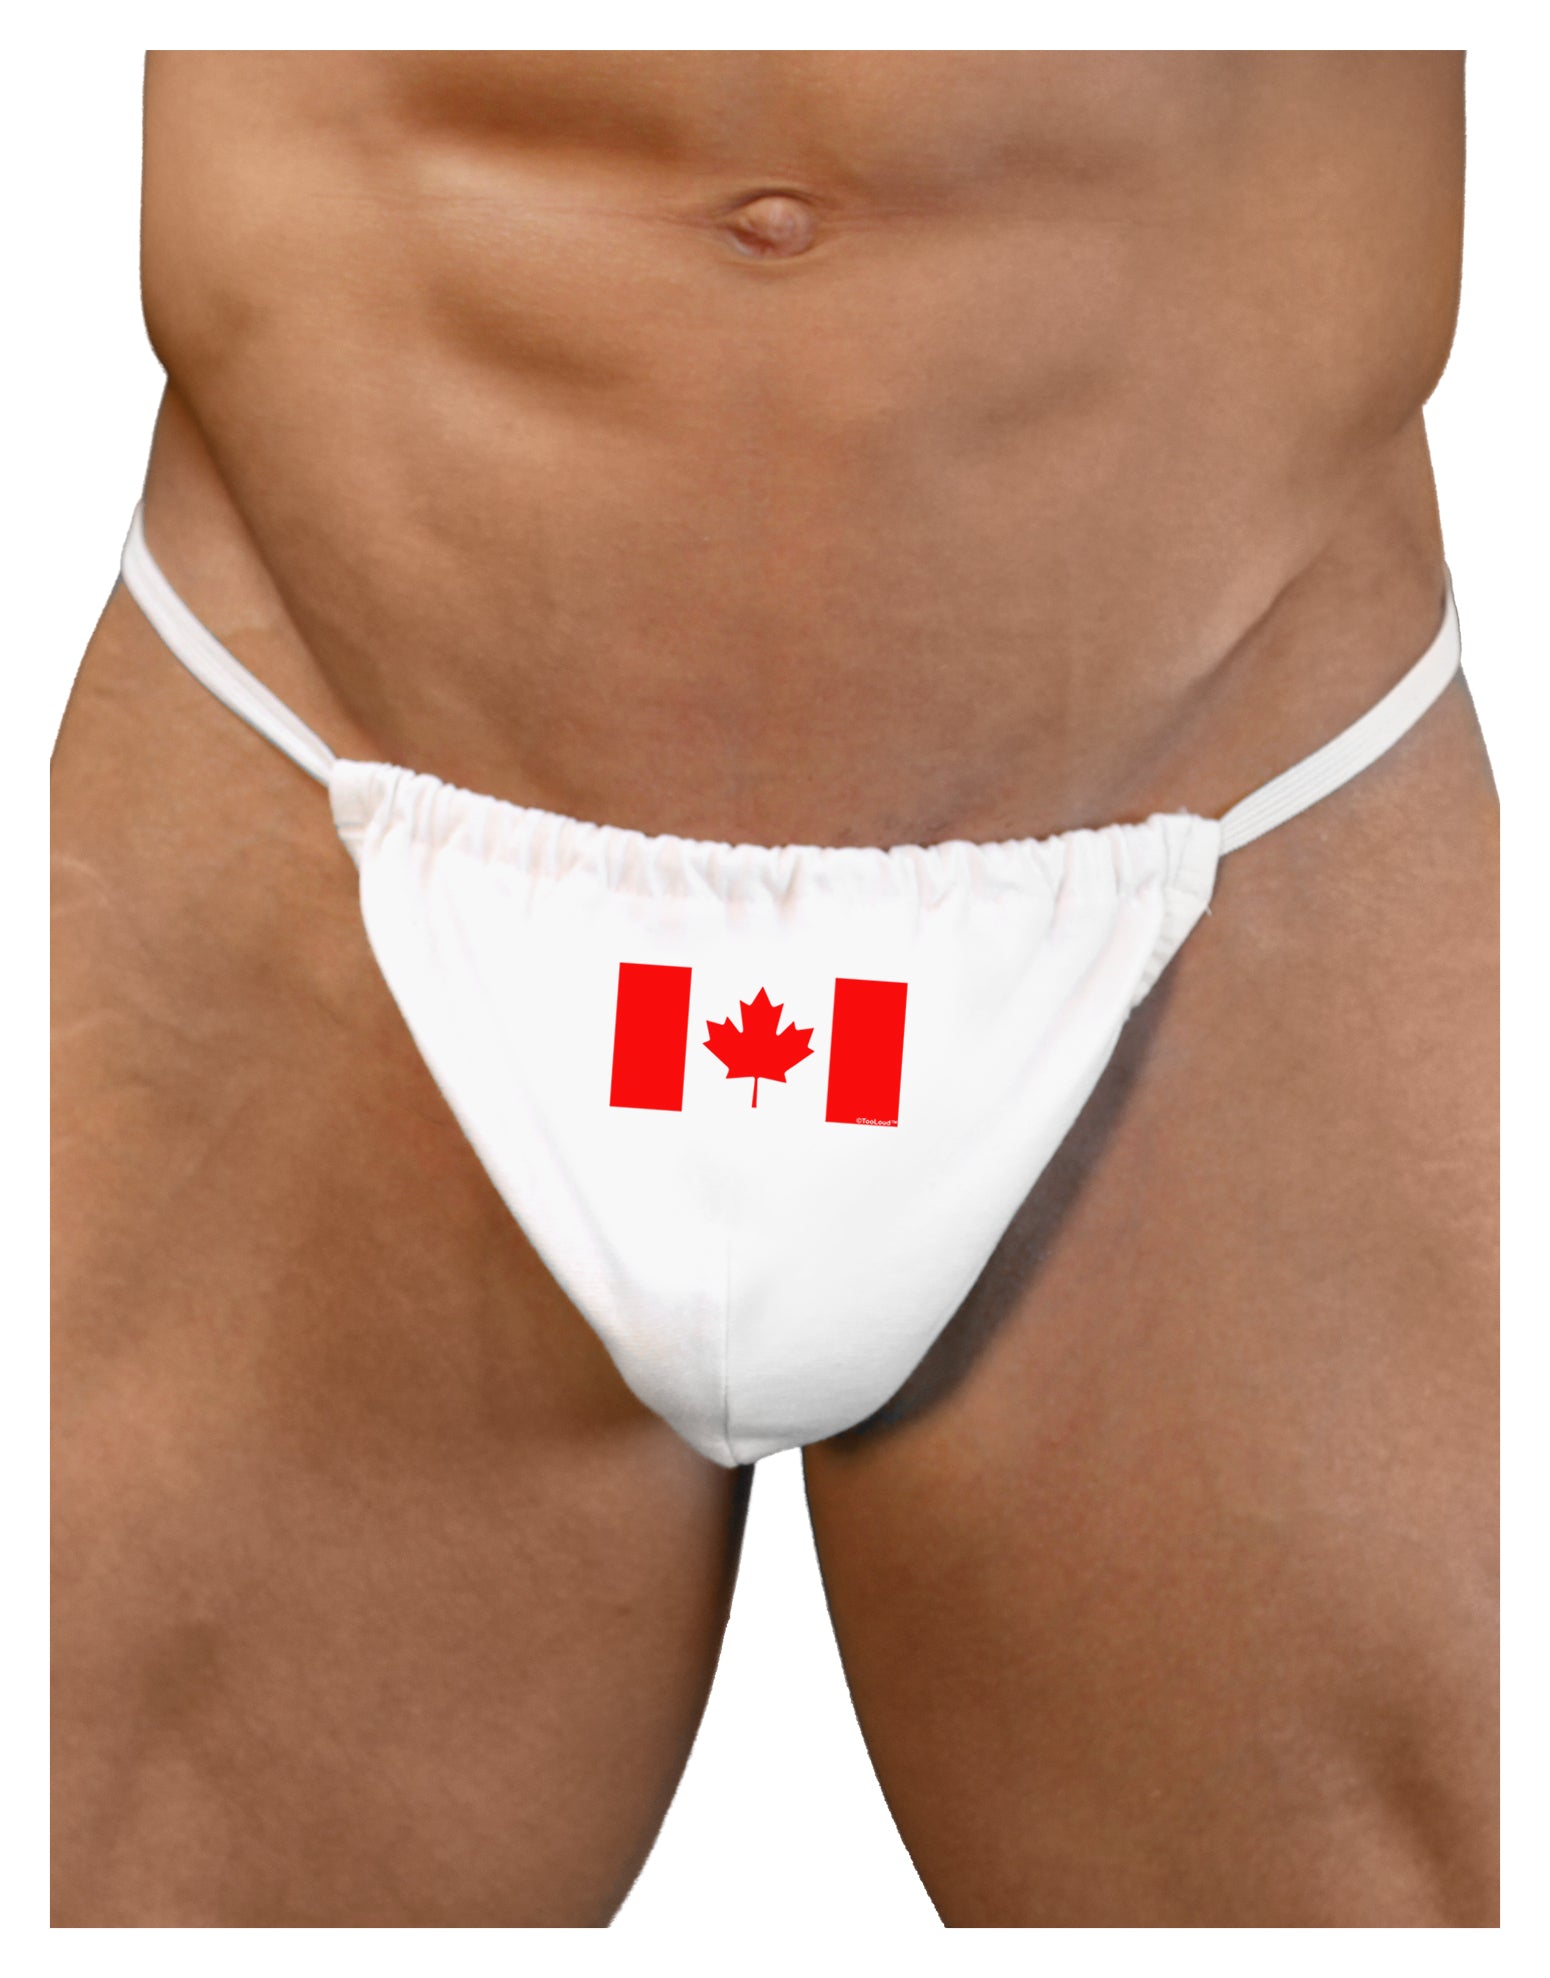 Printed Underwear -  Canada